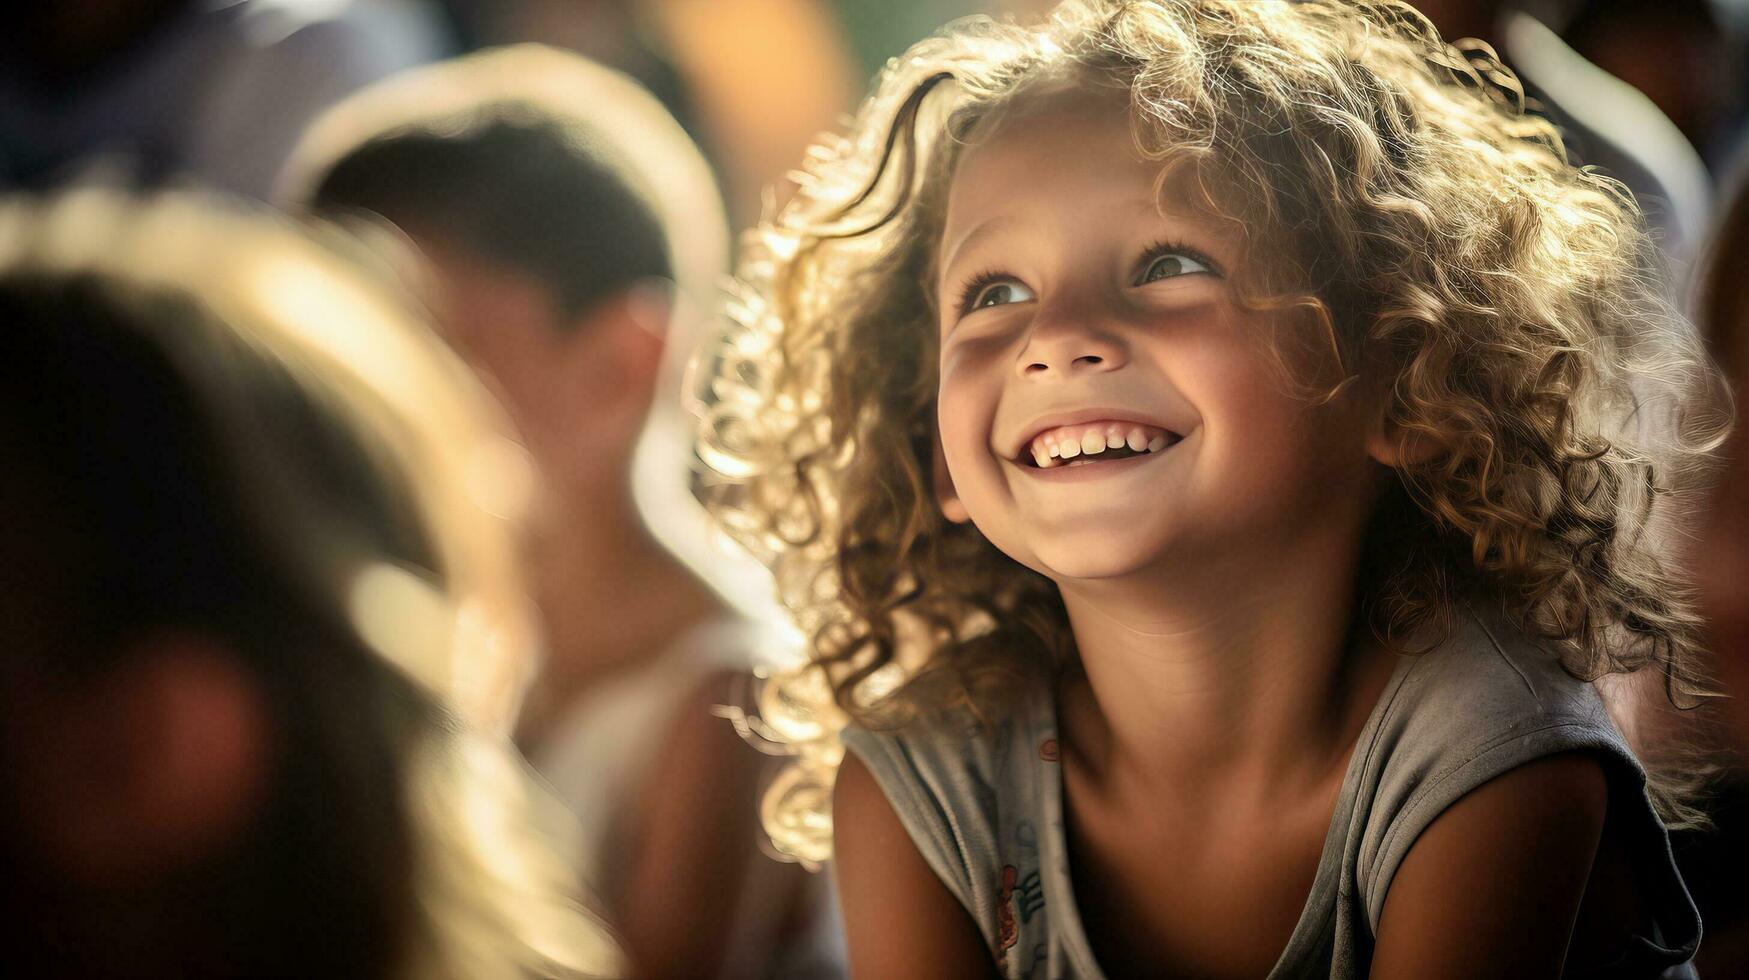 AI generated Young child joyful moments photo